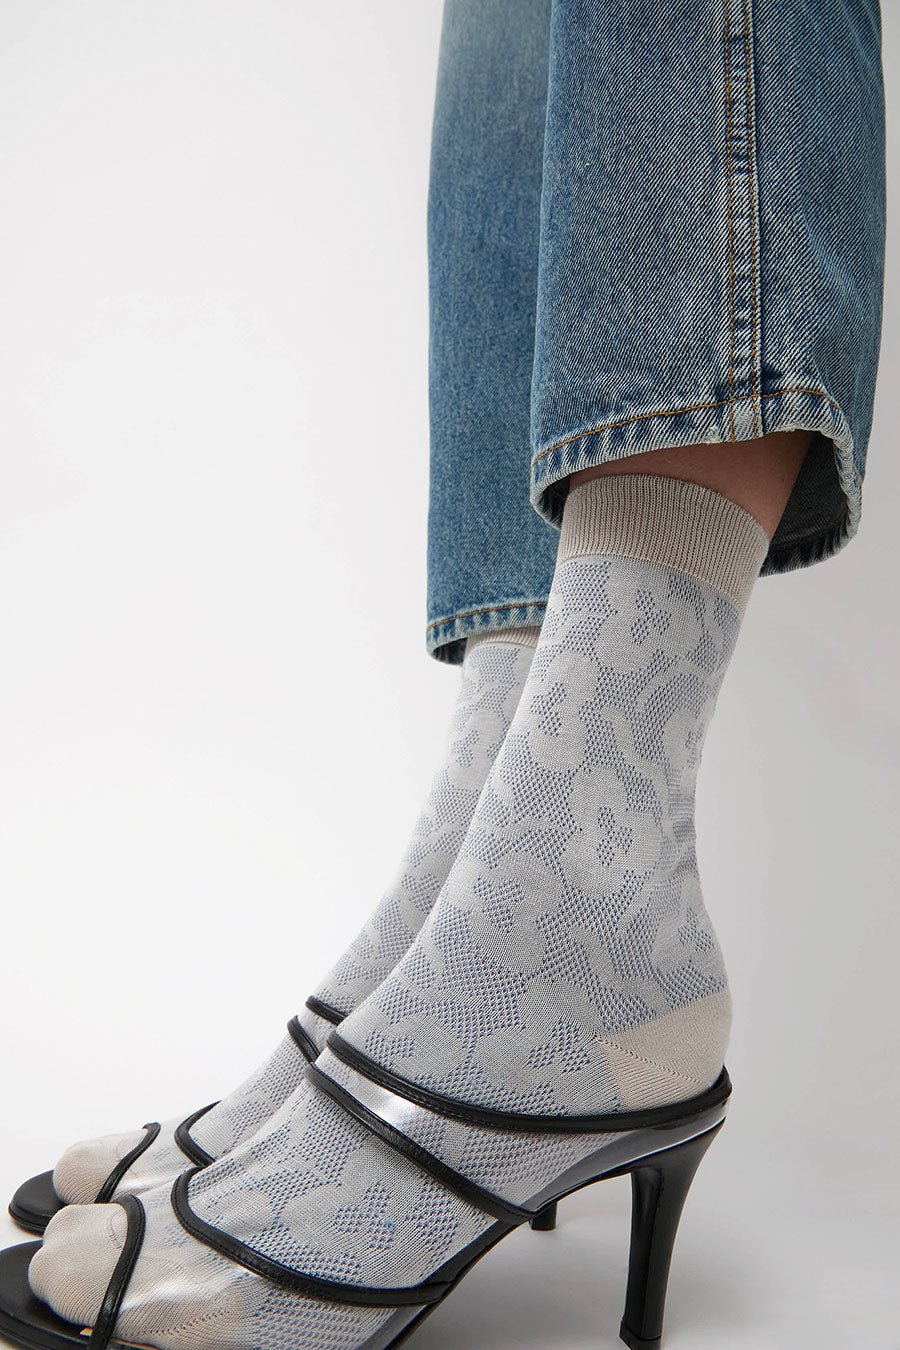 Maria La Rosa Floral Jacquard Mid Calf Socks in Powder Blue